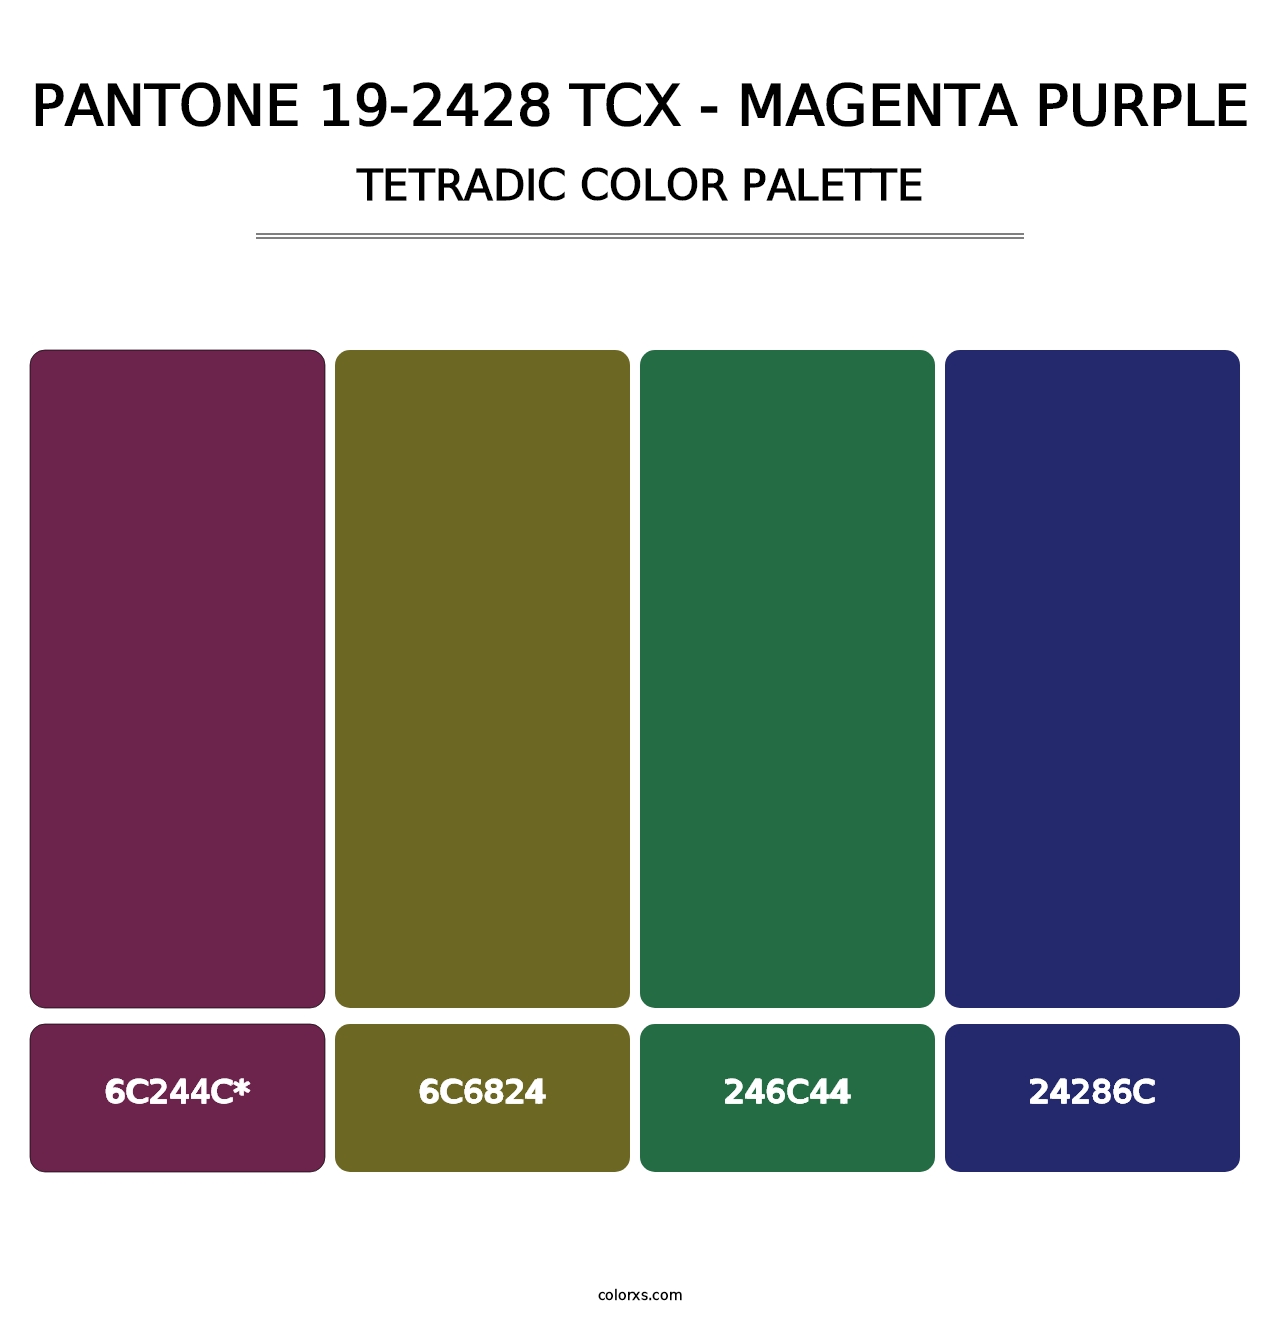 PANTONE 19-2428 TCX - Magenta Purple - Tetradic Color Palette